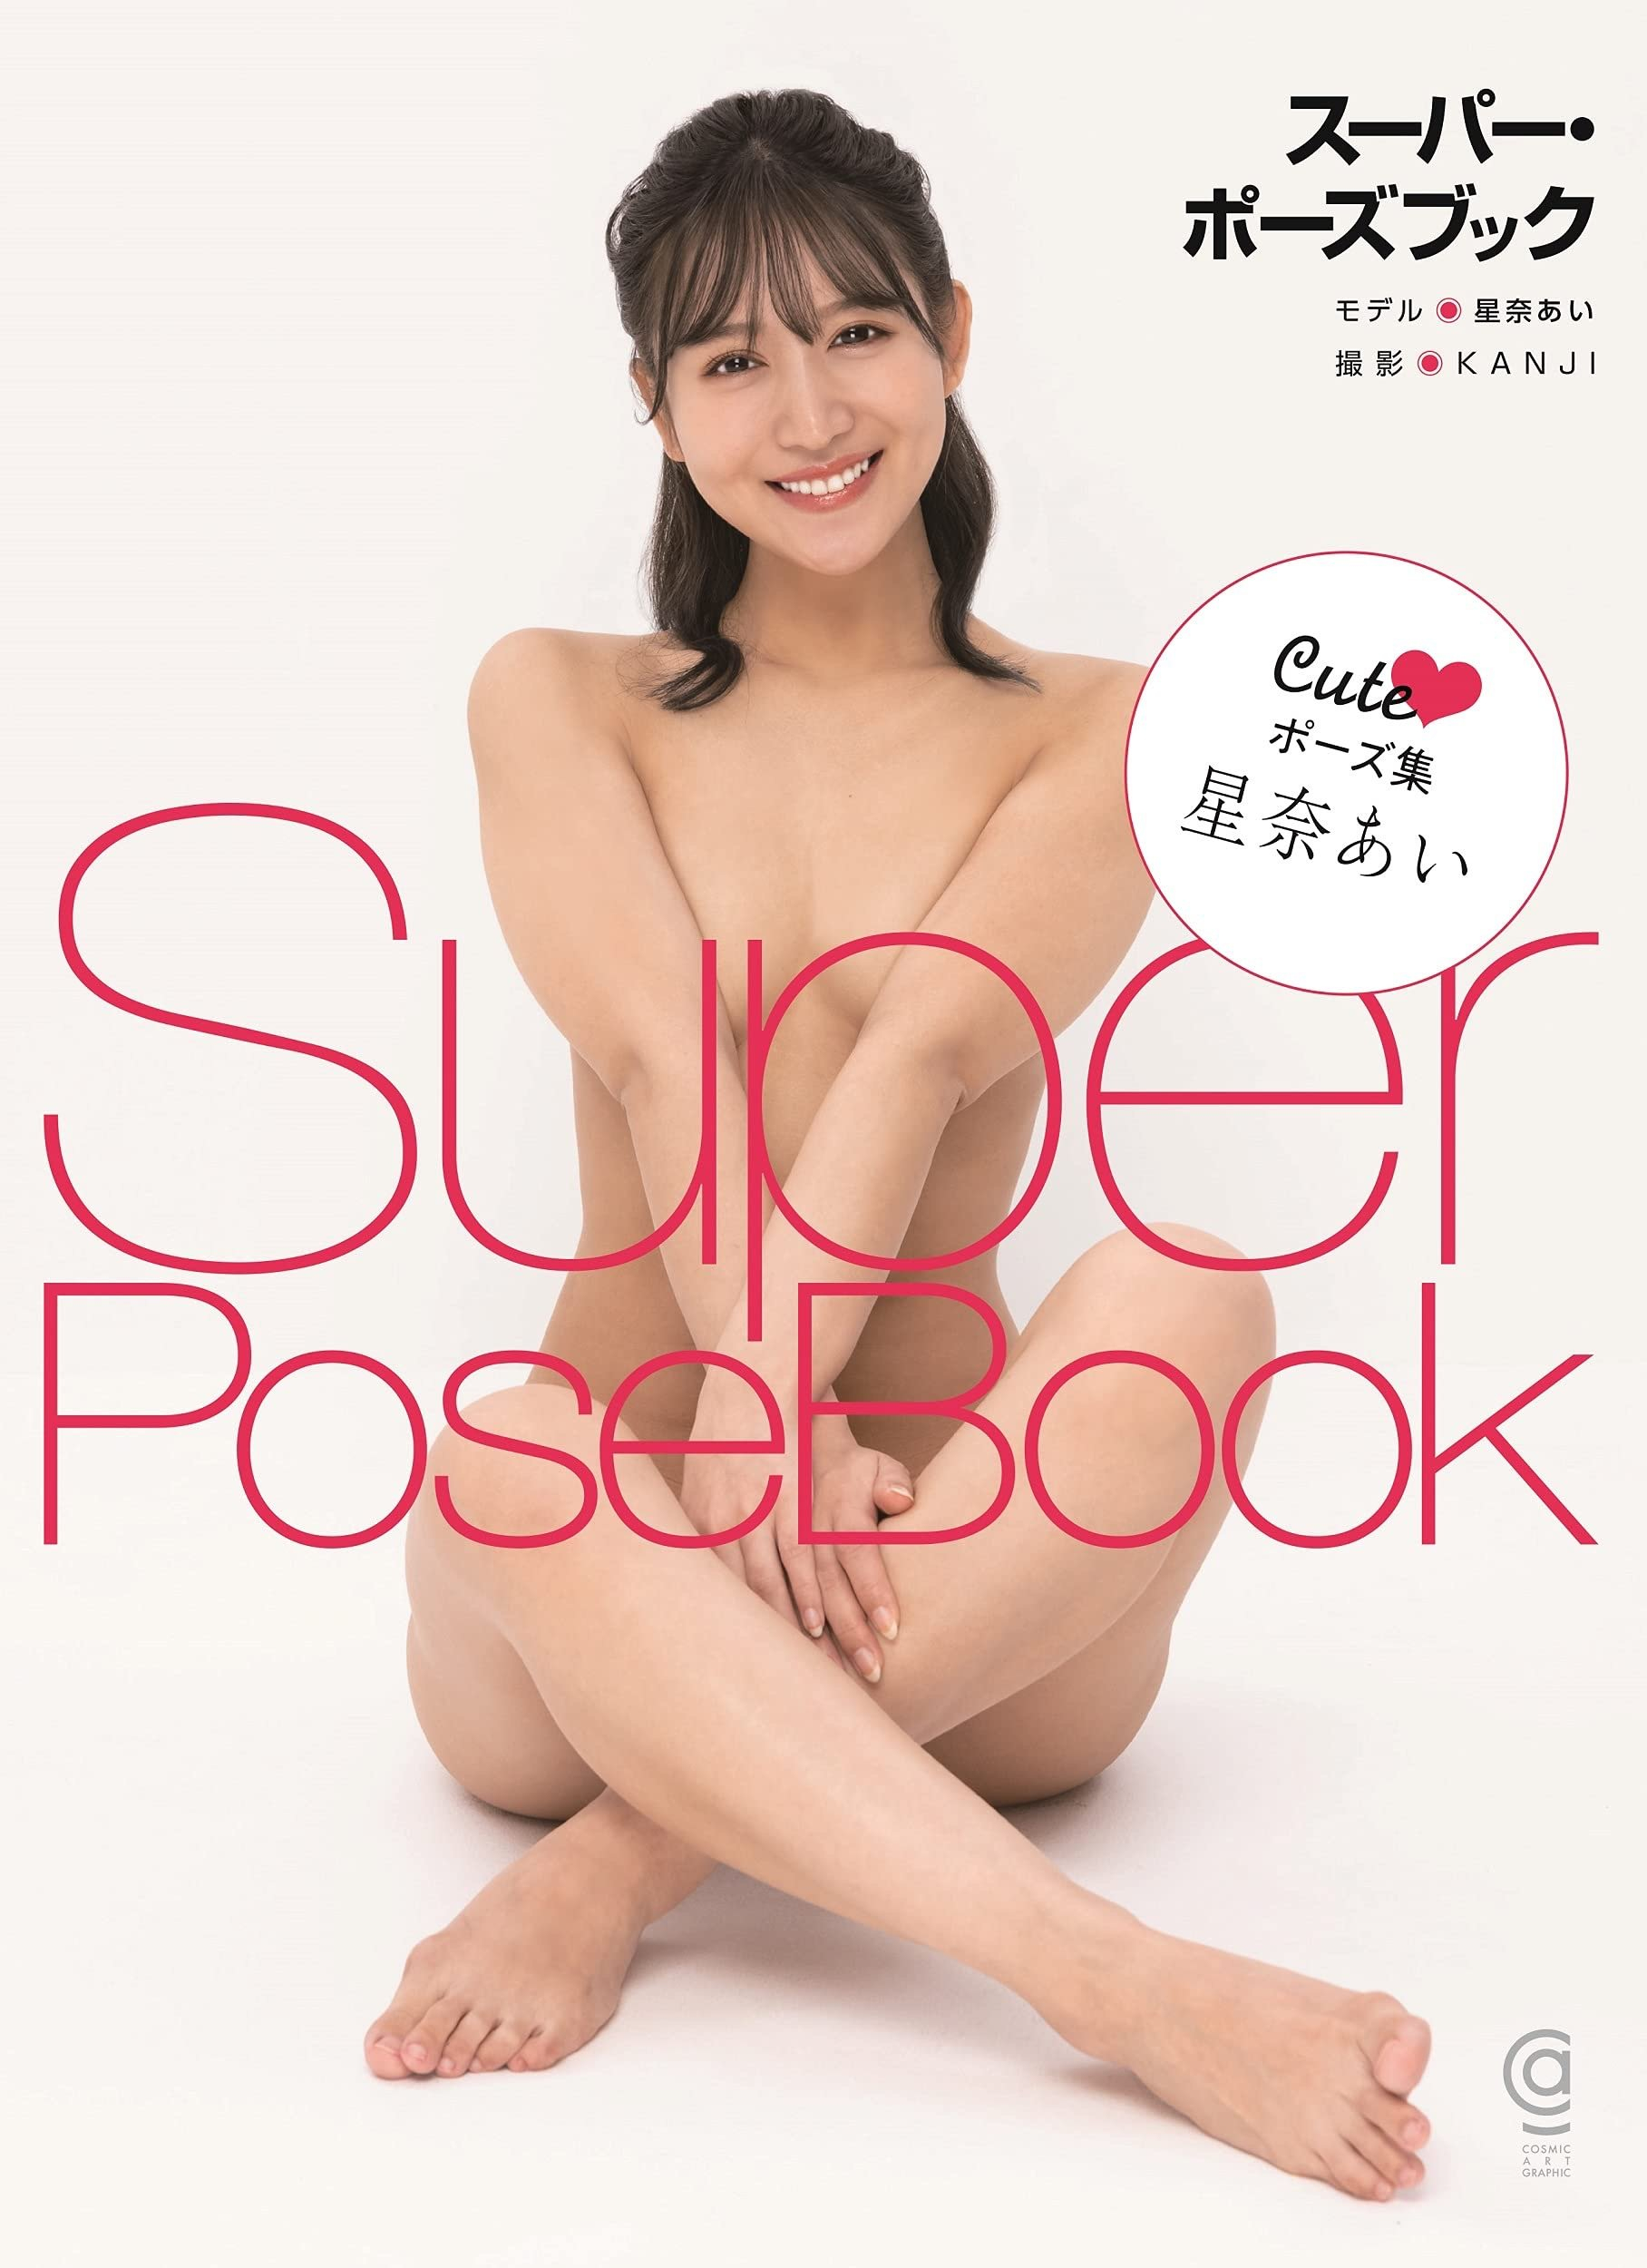 Super pose nude book